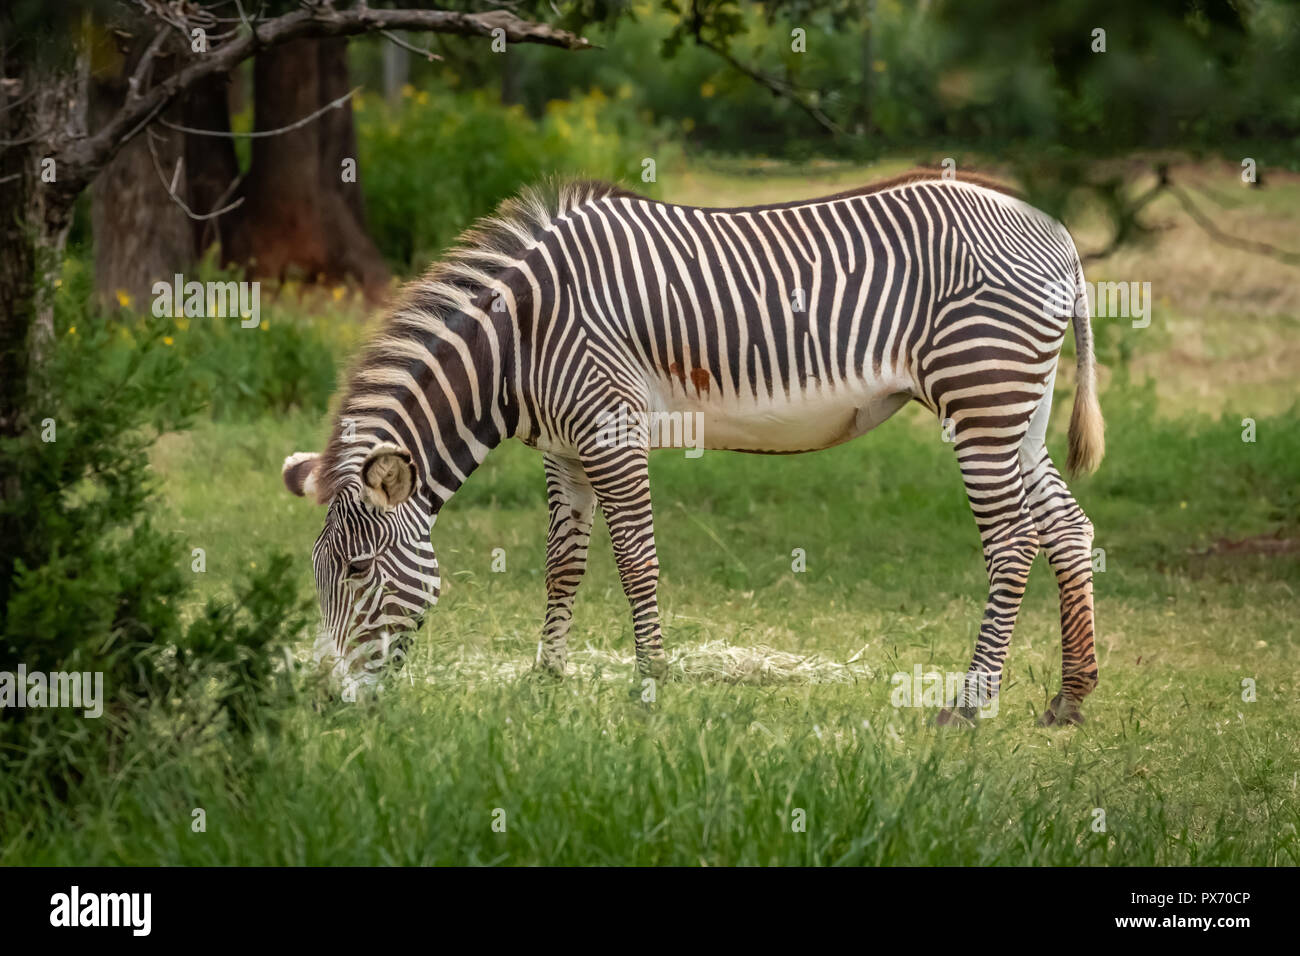 Grevy's Zebra (Equus grevyi) grazing in it's enclosure in a zoo Stock Photo